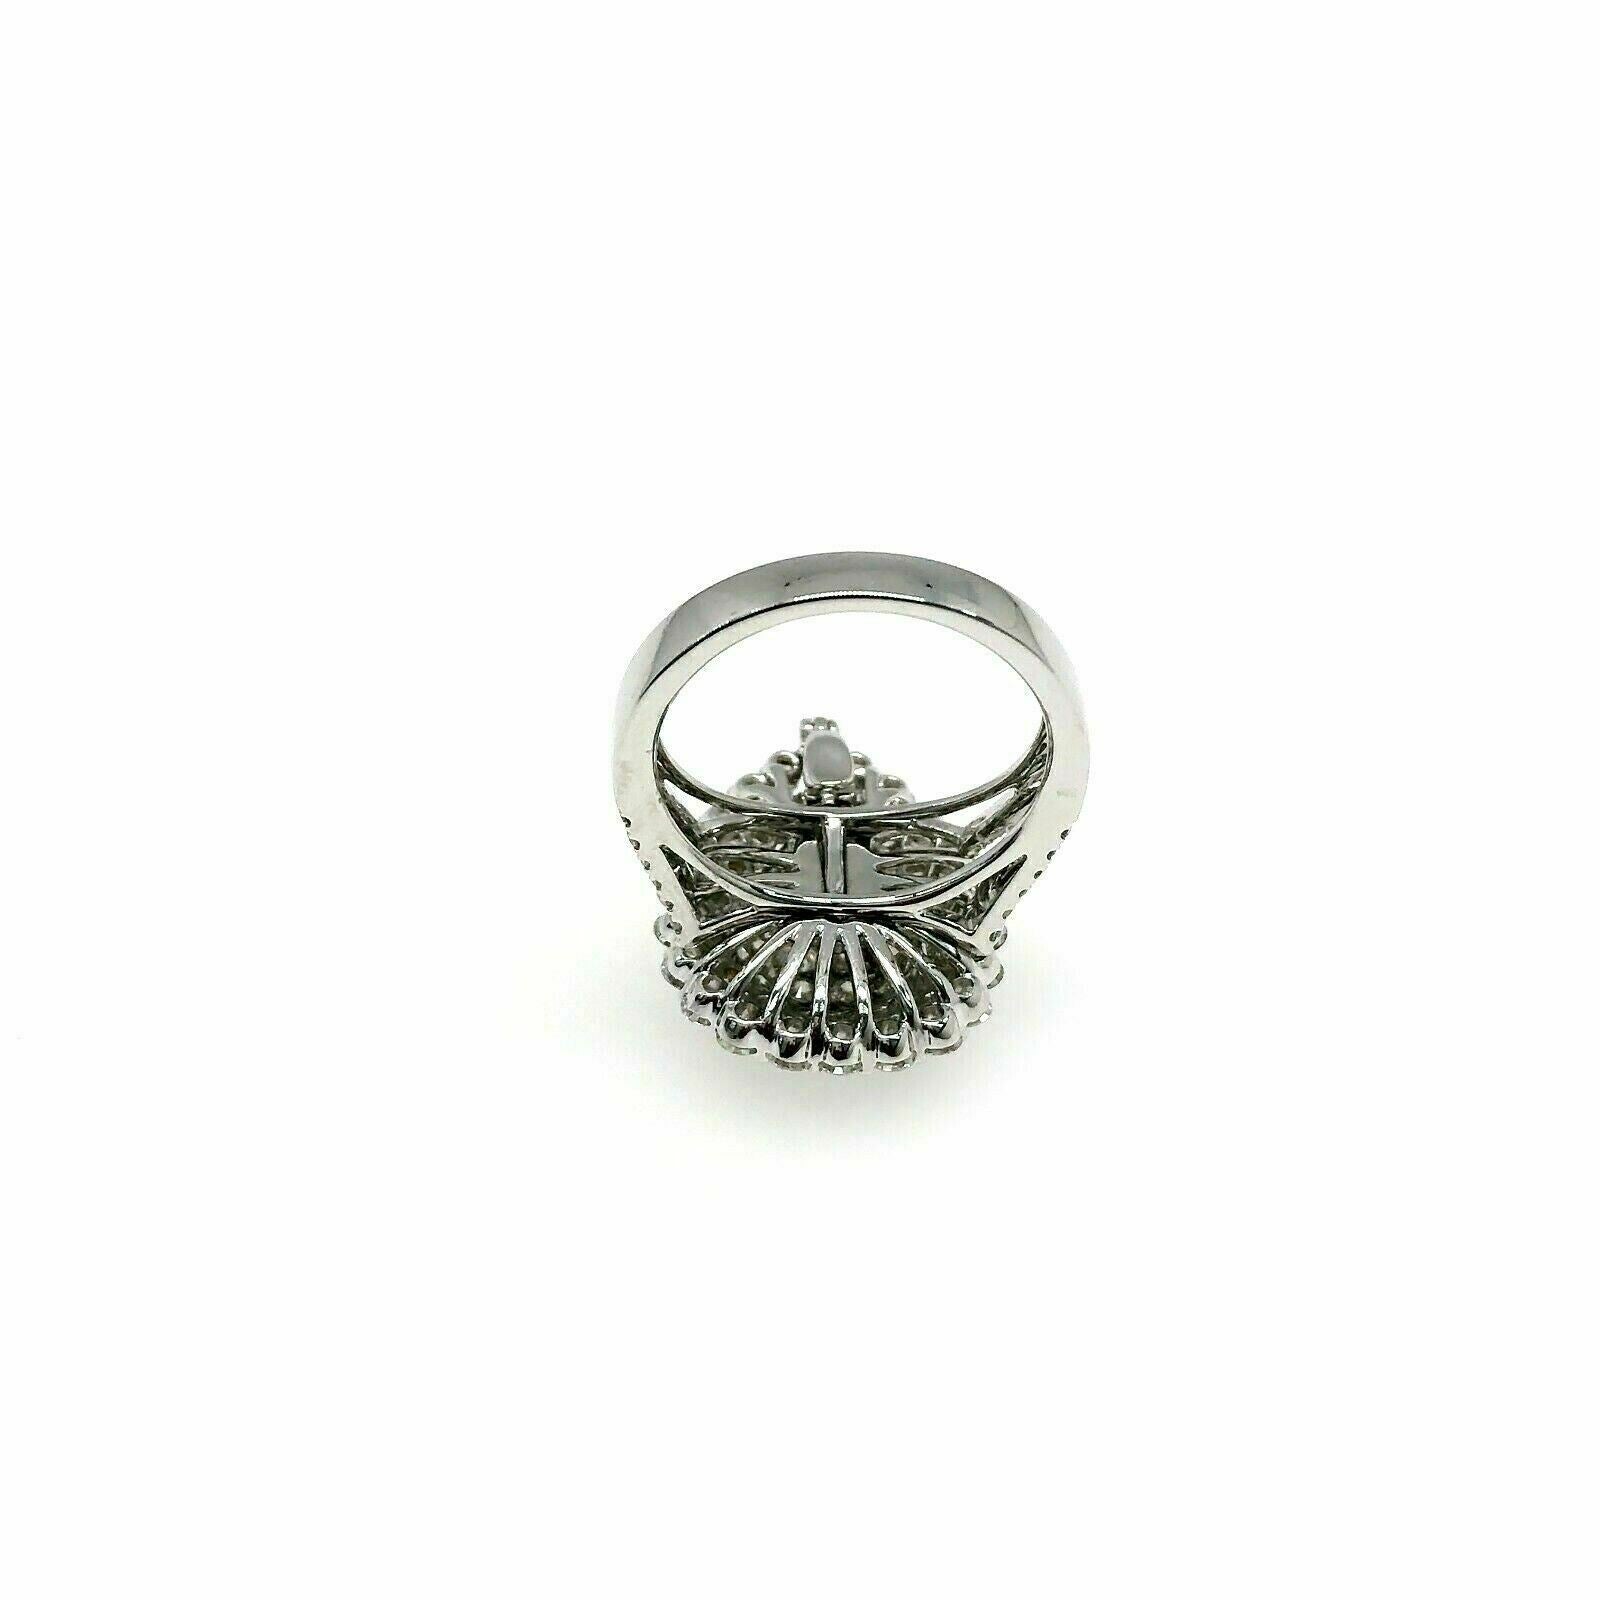 2.63 Carat t.w. Pear Shaped Diamond Halo Wedding Ring 18K Gold Custom Made